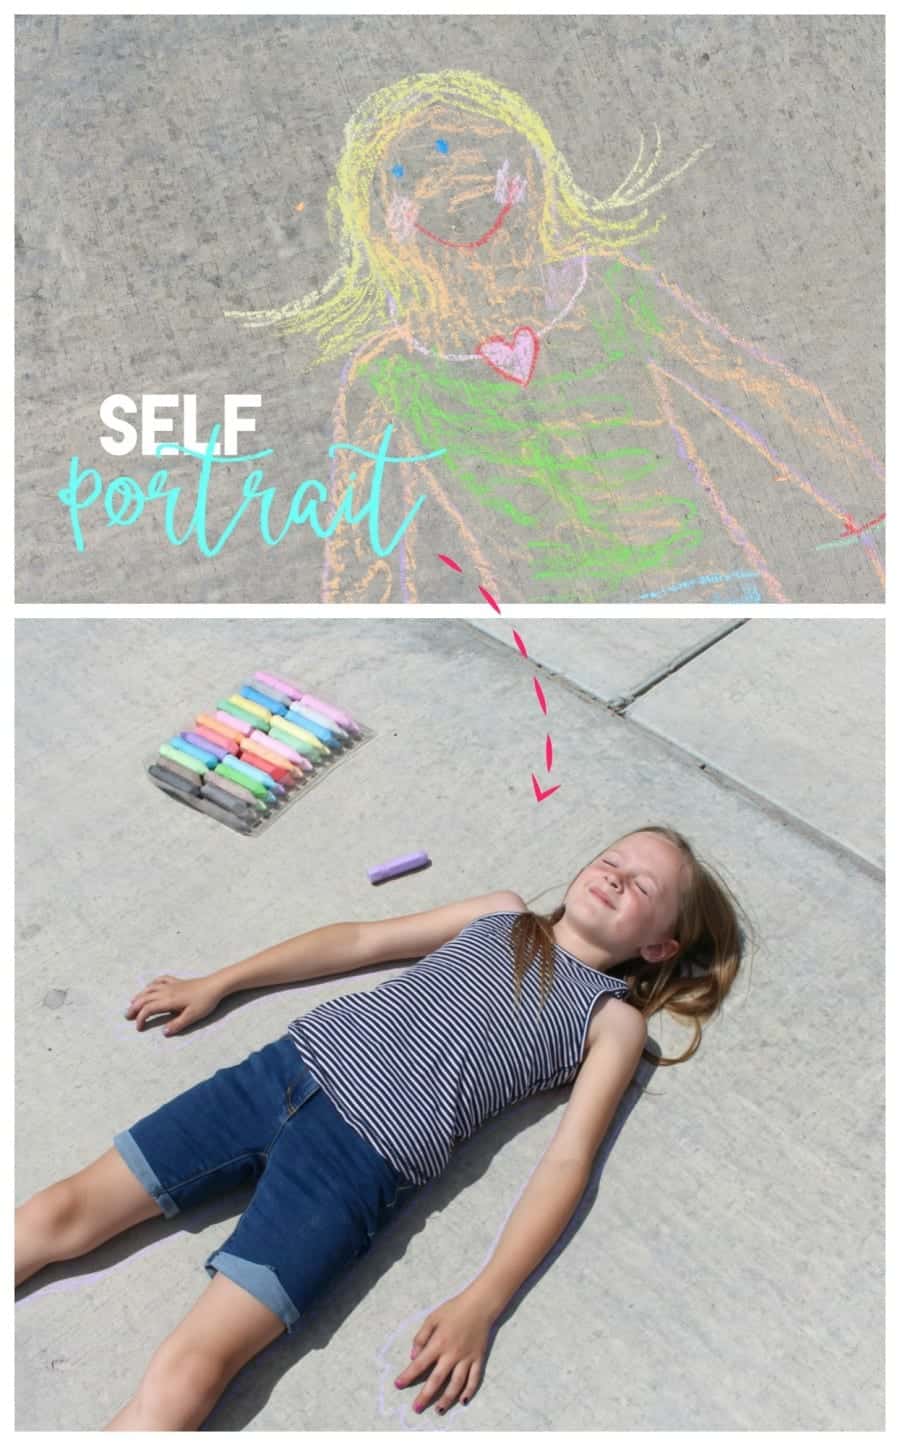 Self Portrait Sidewalk Chalk 